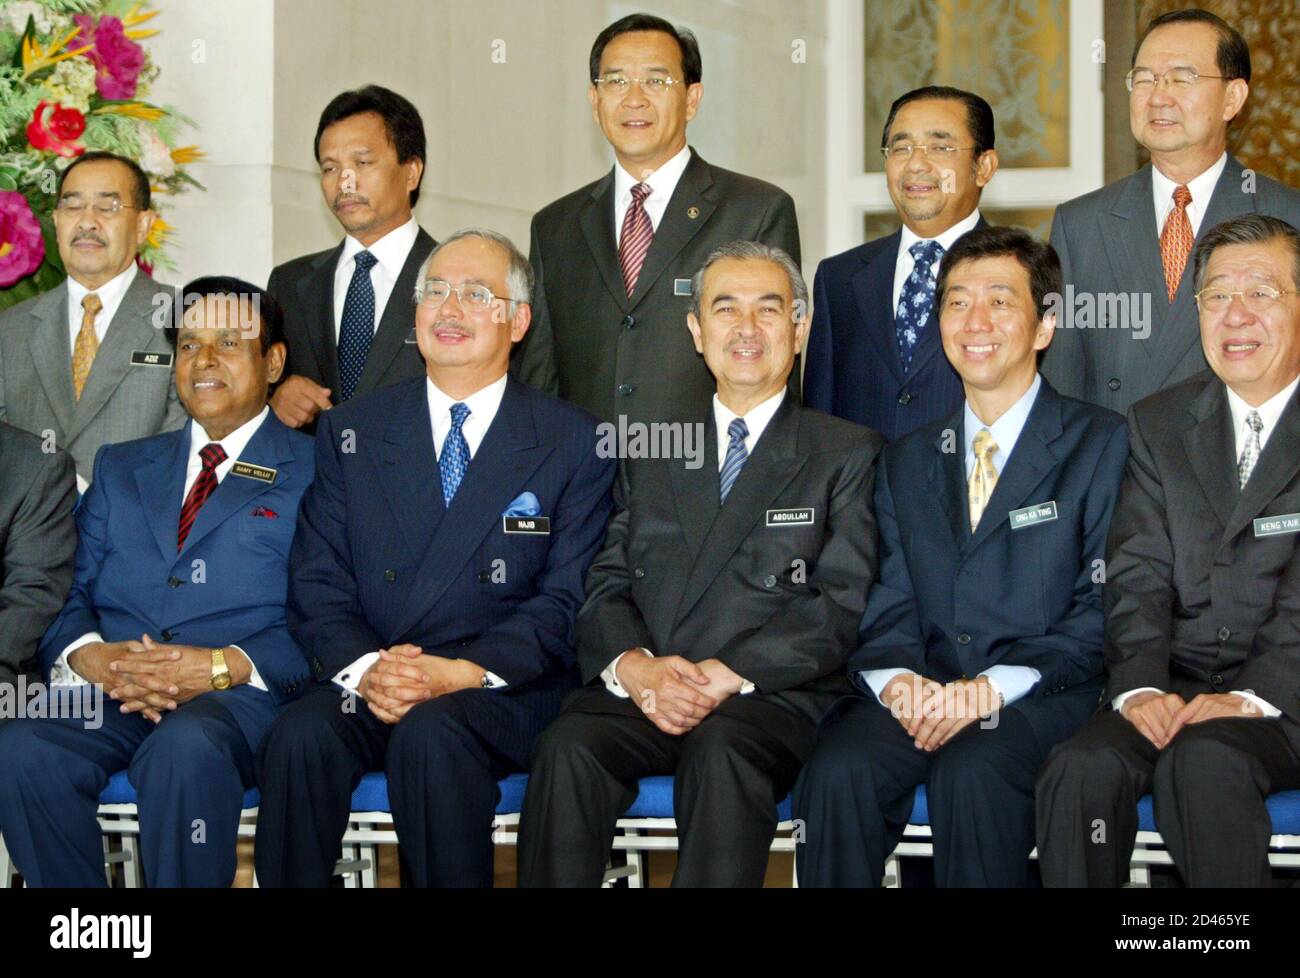 Malaysian Prime Minister Abdullah Ahmad Badawi And His Deputy Najib Razak Pose With Cabinet Ministers In Putrajaya Malaysian Prime Minister Abdullah Ahmad Badawi Front C And His Deputy Najib Razak Front 2nd